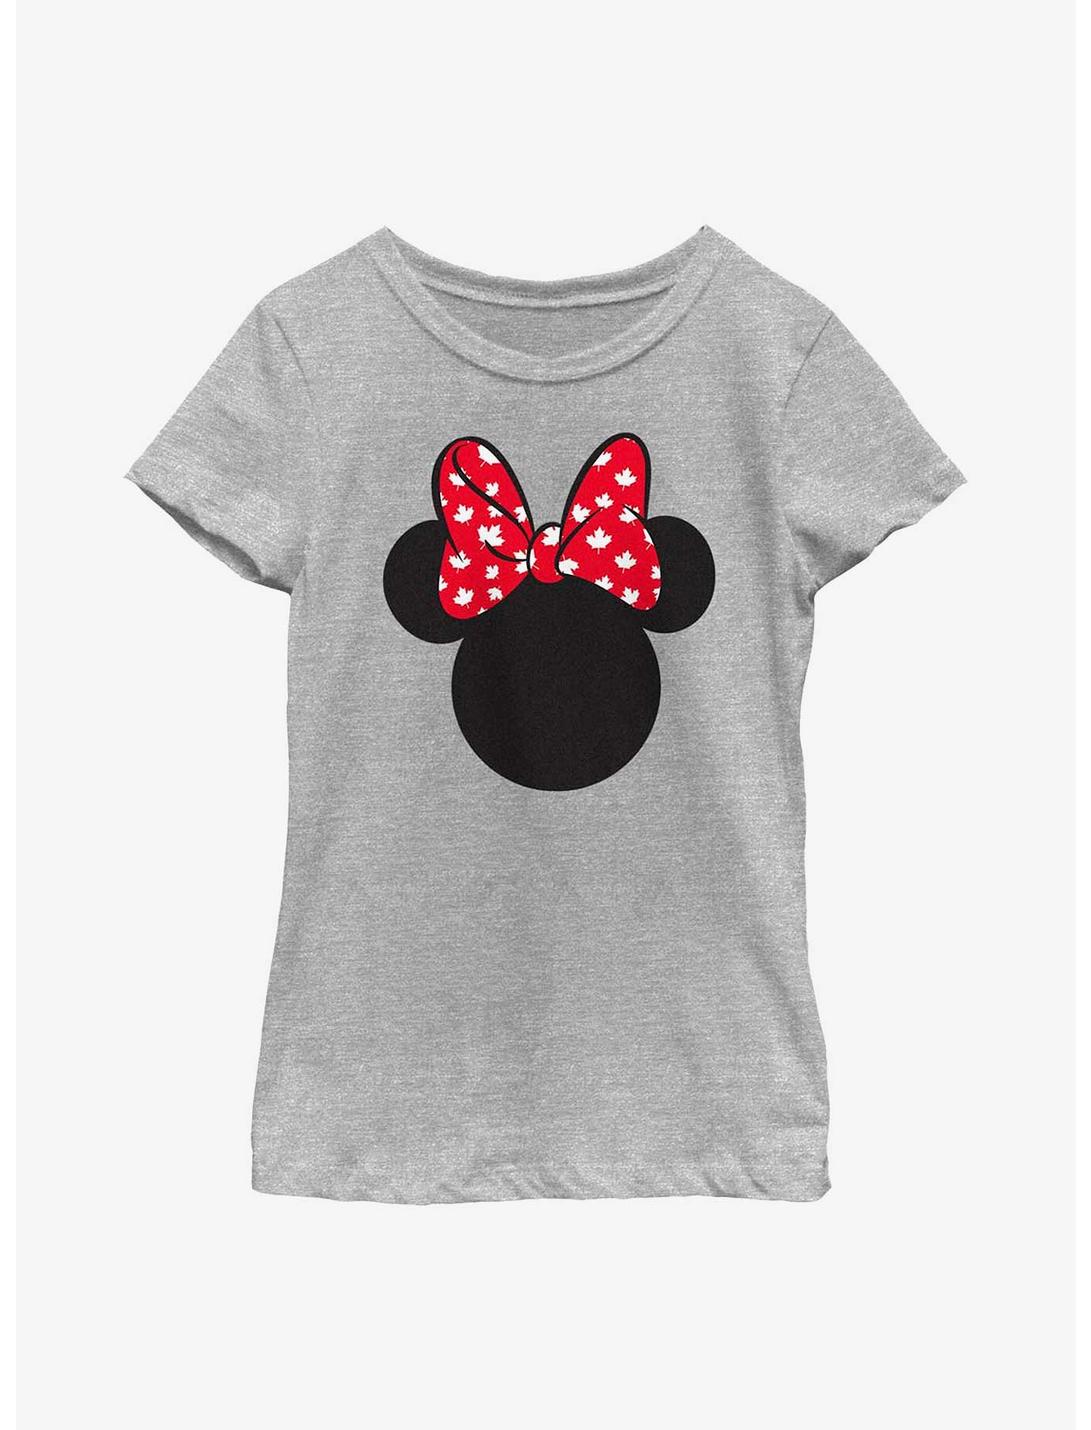 Disney Minnie Mouse Maple Leaf Ears Youth Girls T-Shirt, ATH HTR, hi-res